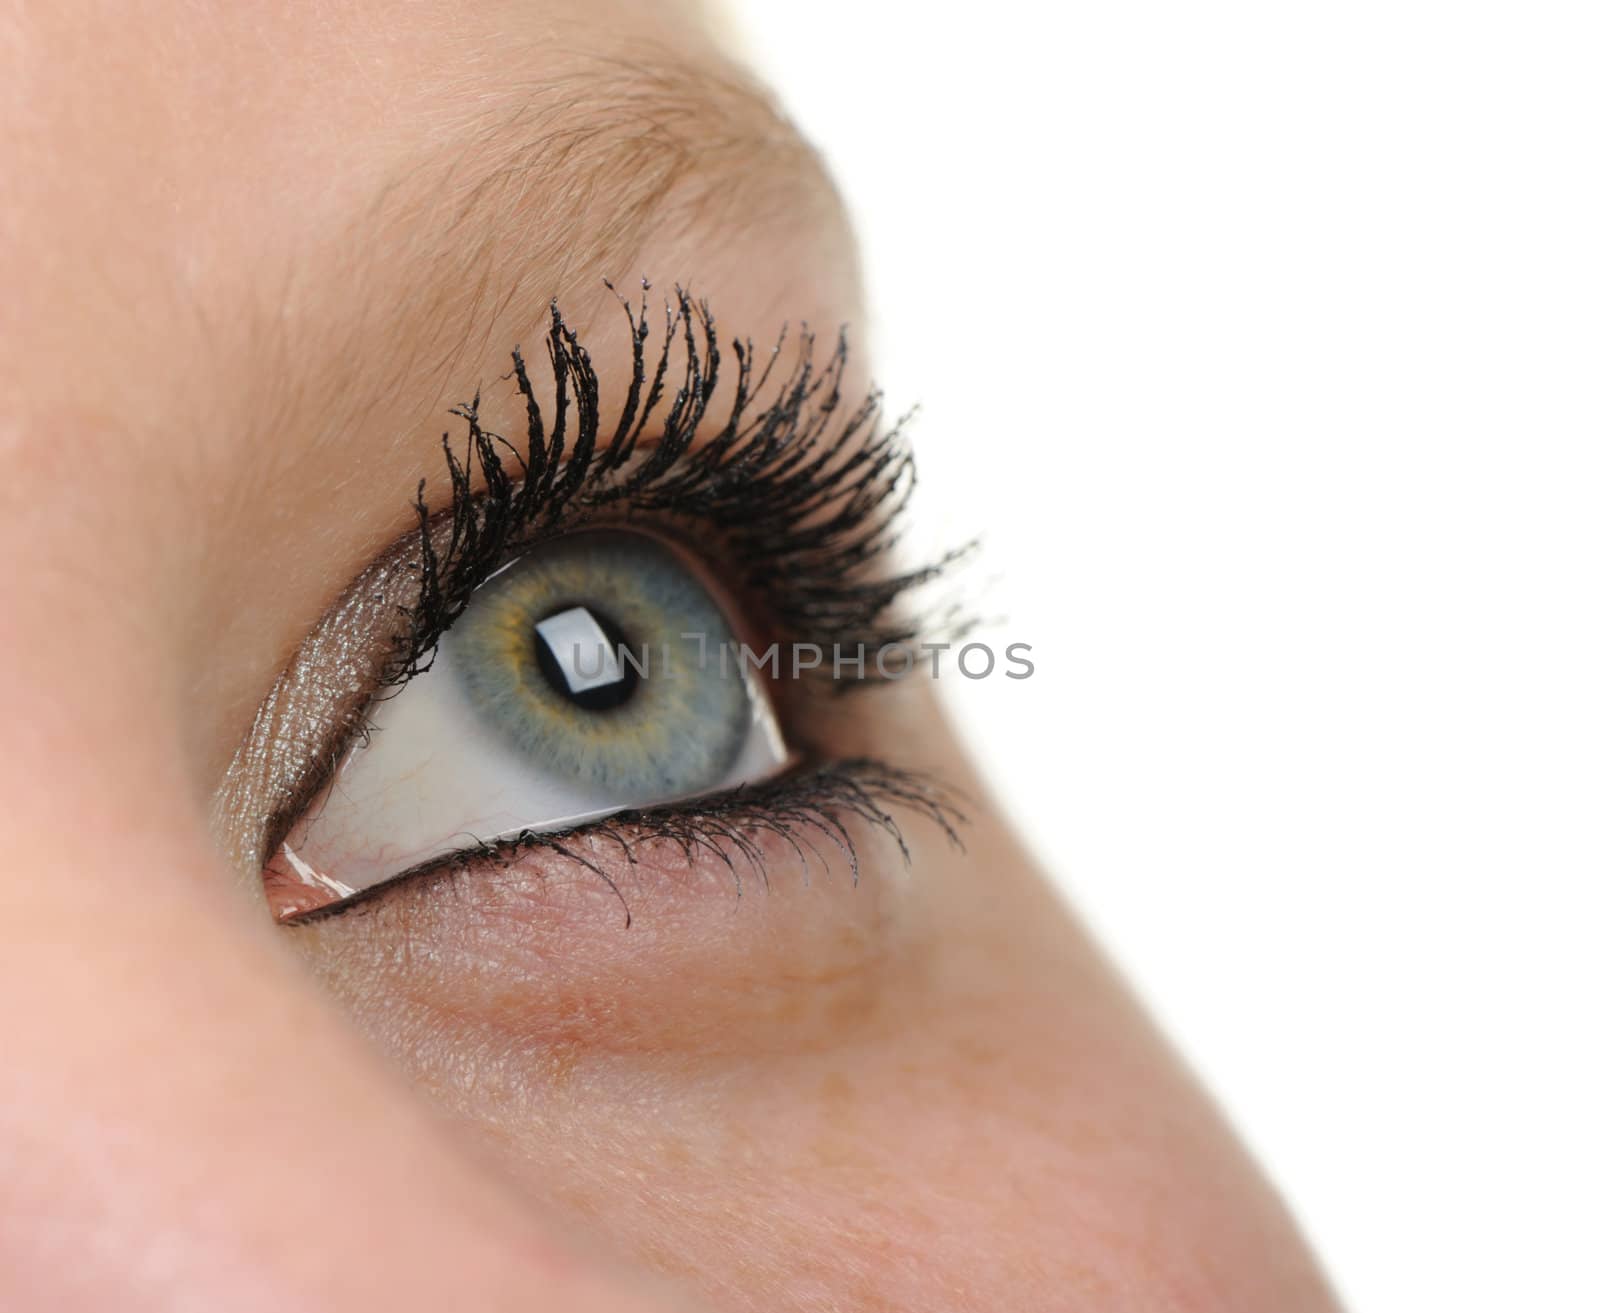 Female eye. A photo close up